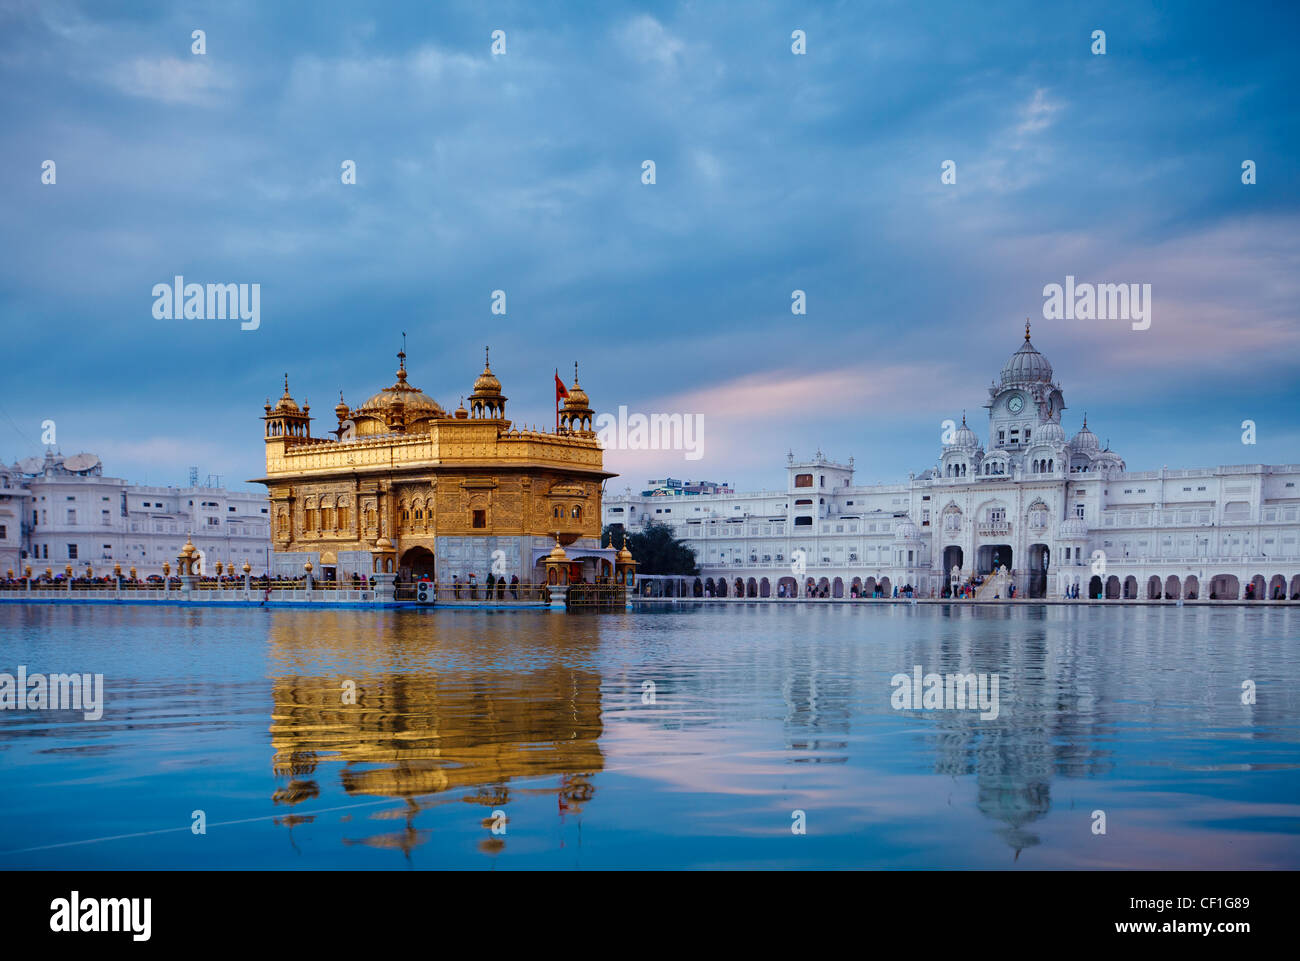 The Golden Temple of Amritsar, Punjab, India Stock Photo - Alamy